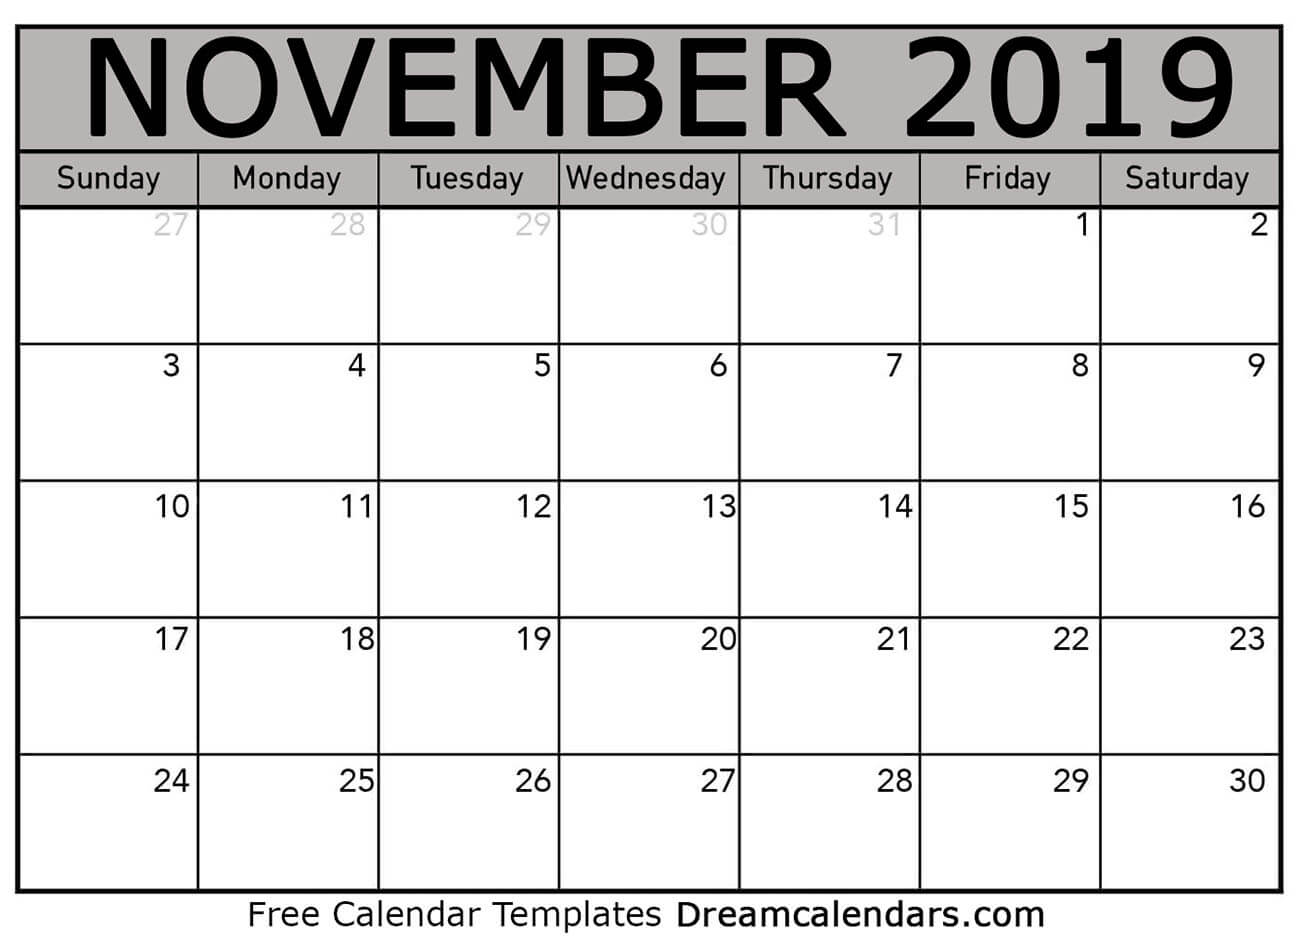 november-2019-calendar-free-blank-printable-with-holidays